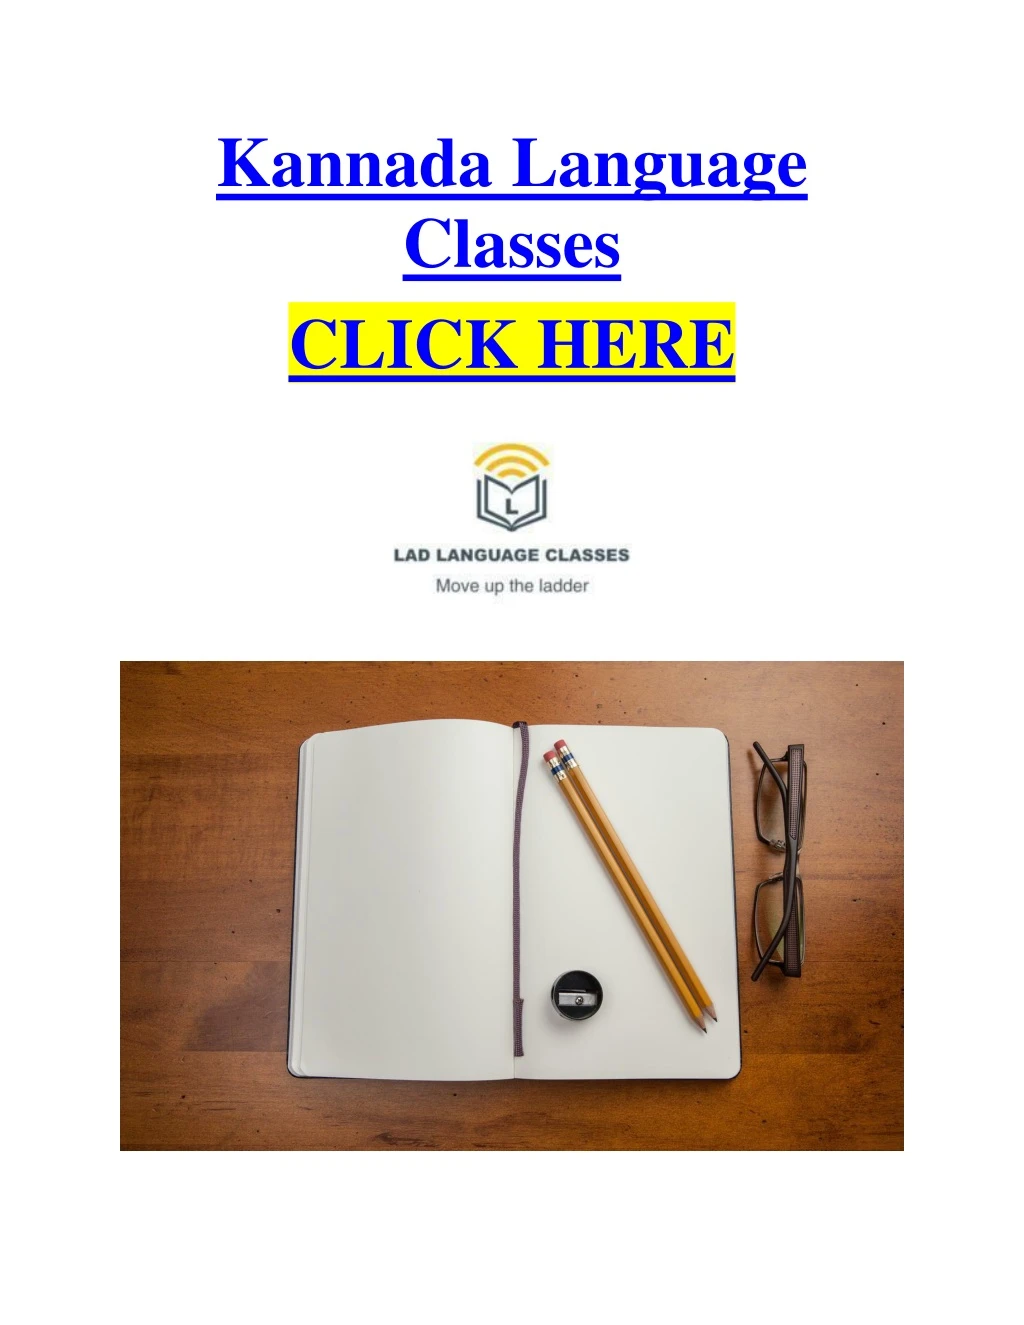 kannada language classes click here